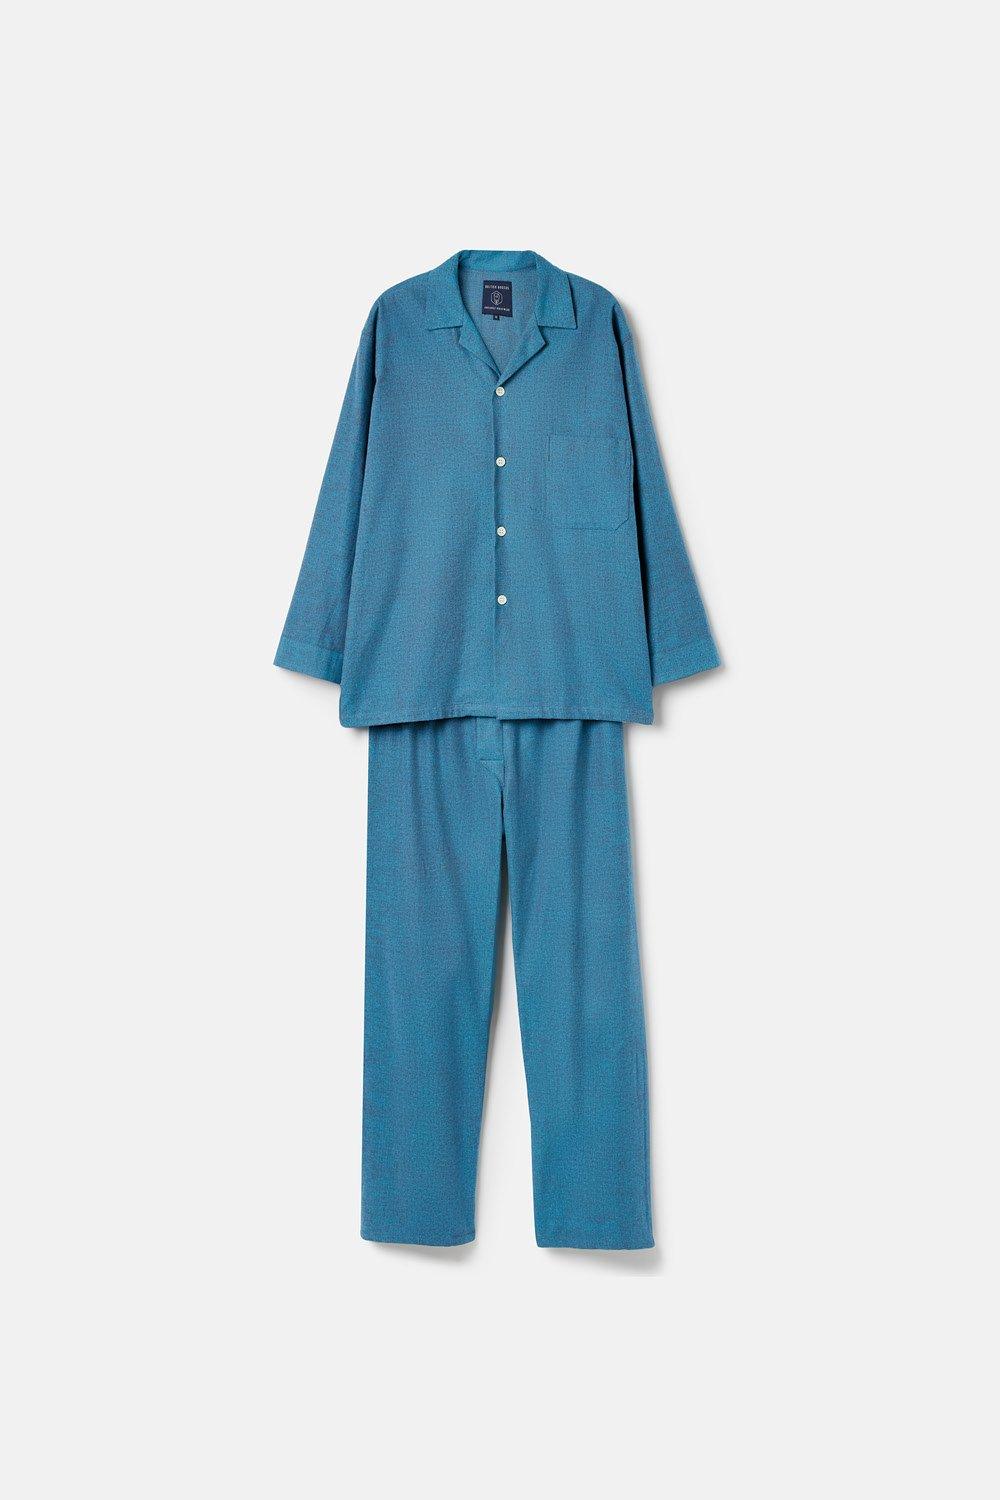 'Stornoway' Herringbone Brushed Cotton Pyjama Set